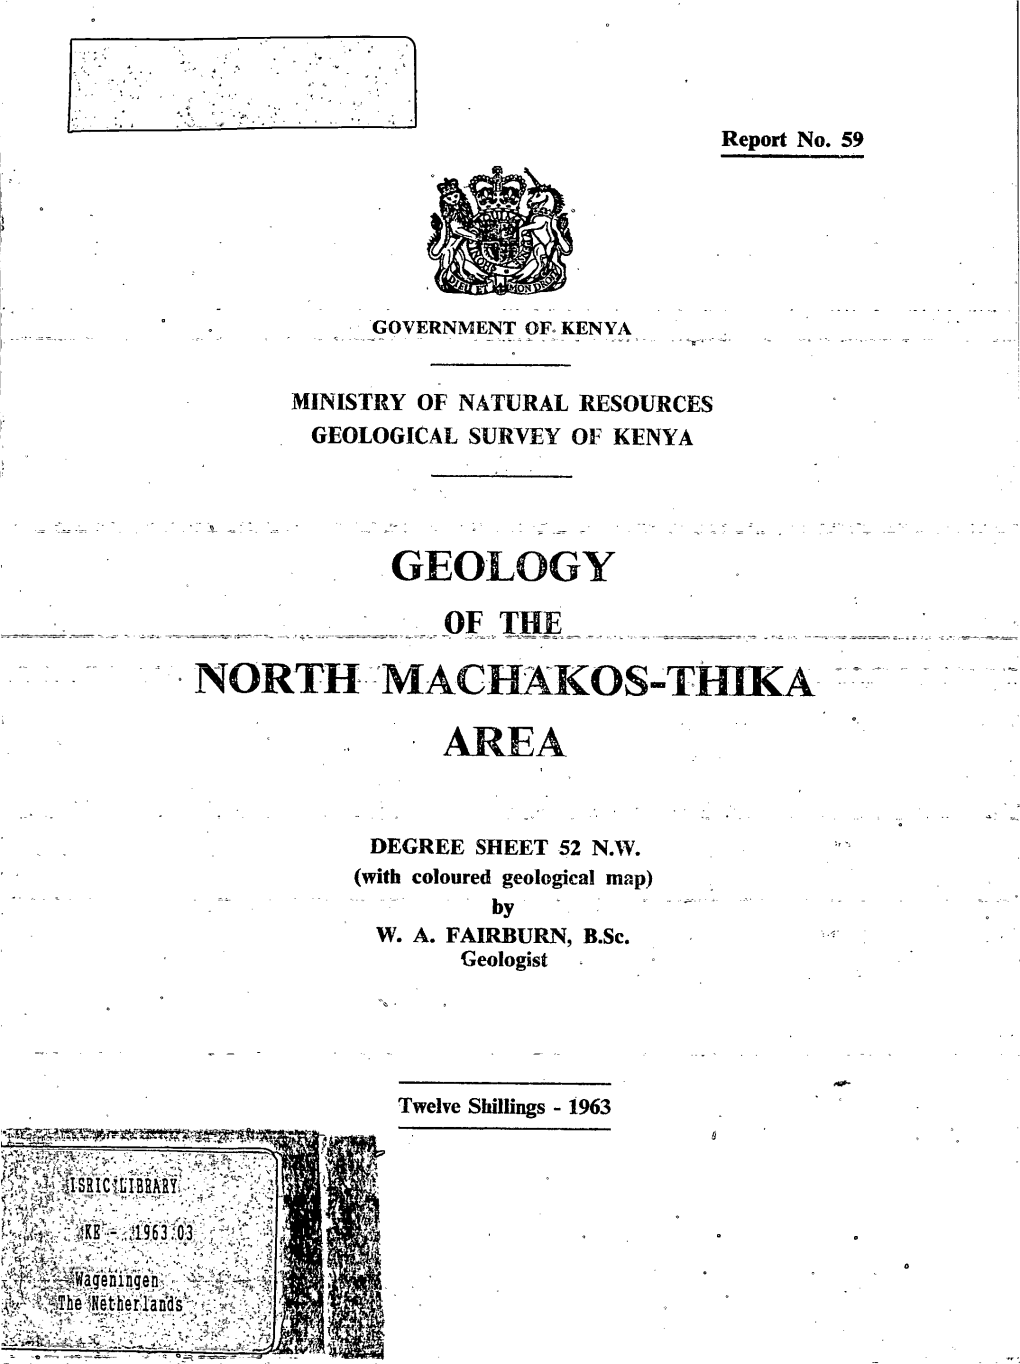 Geology of the North Machakos-Thika Area